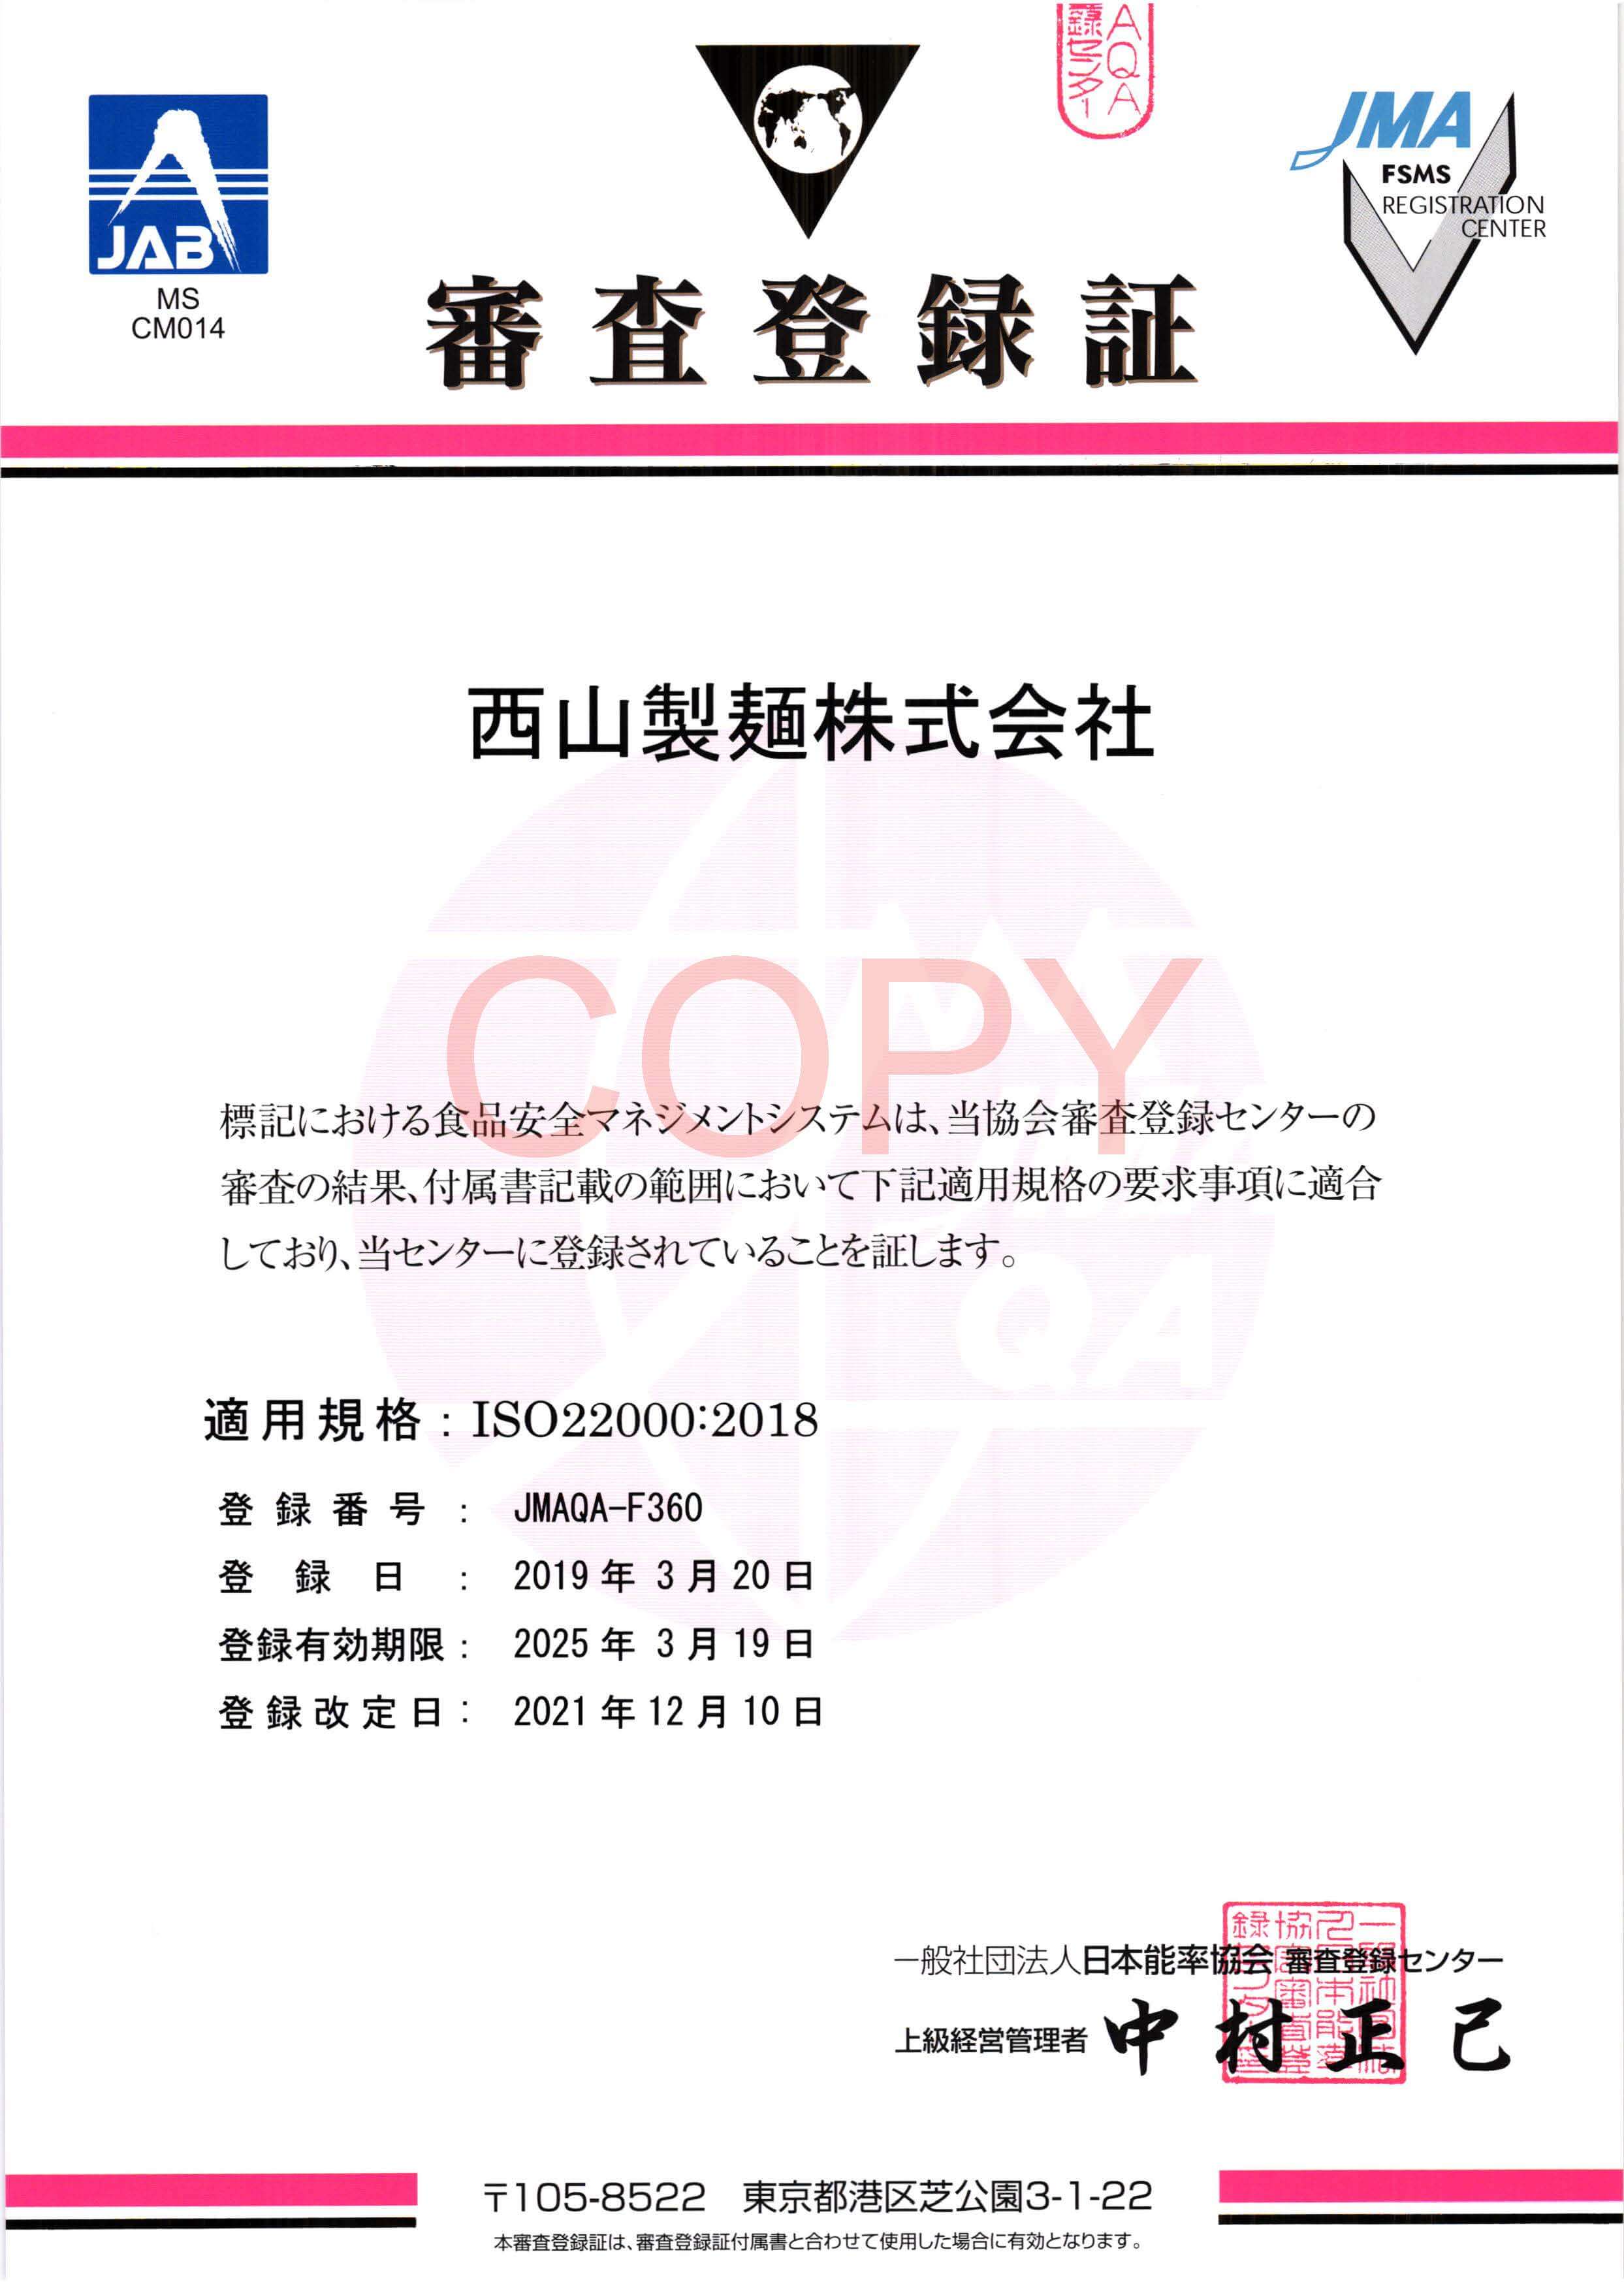 ISO22000Examination registration certificate